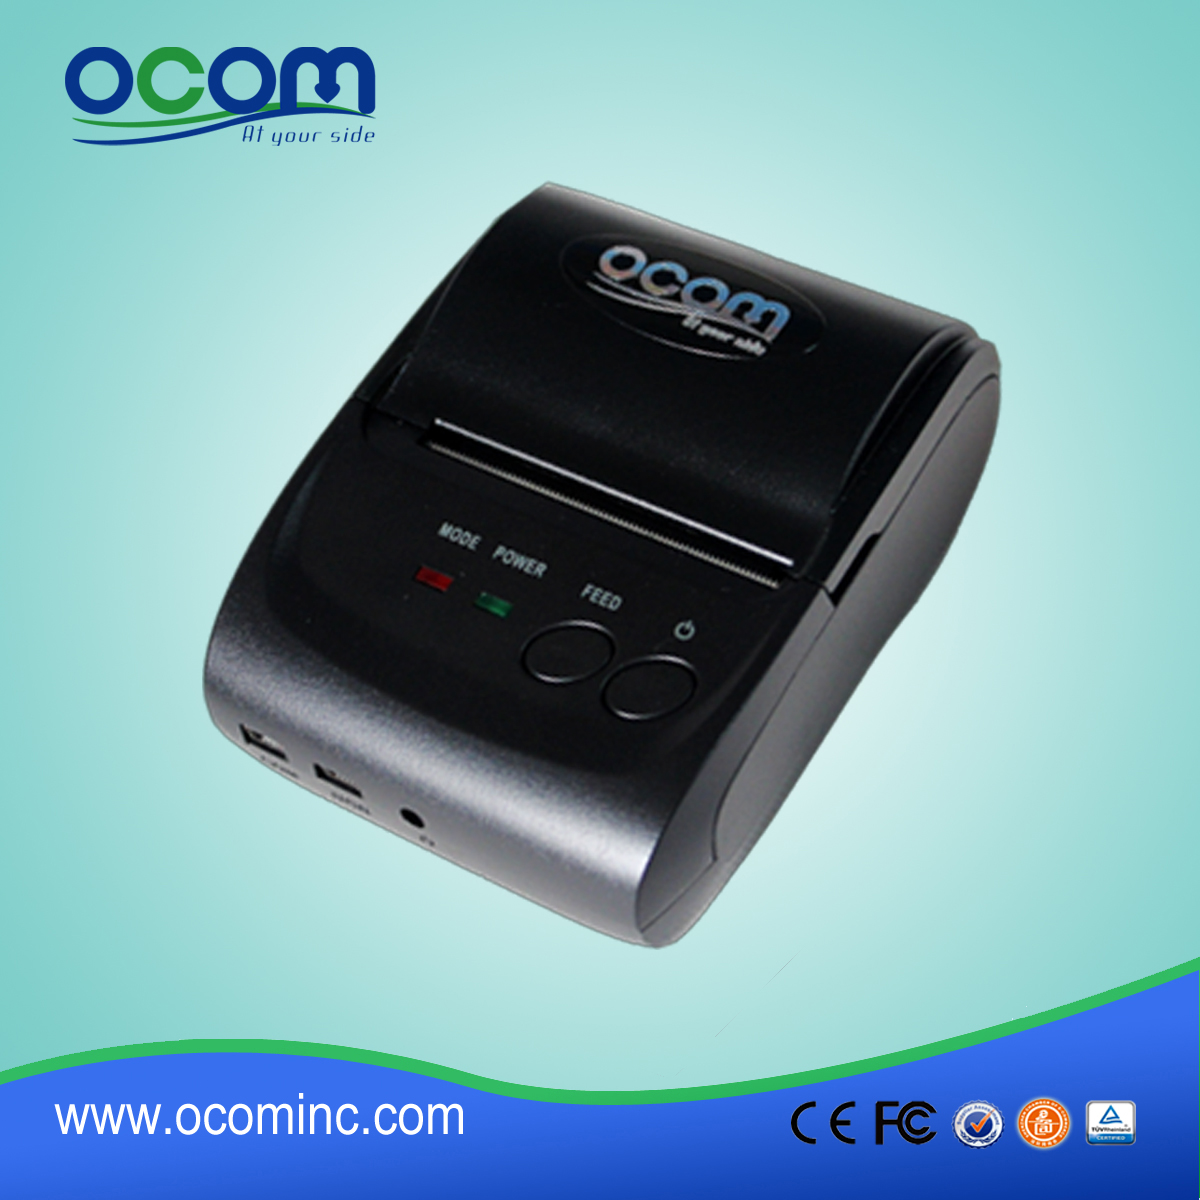 OCPP-M05: Preço impressora térmica portátil, impressora pos impressora térmica android